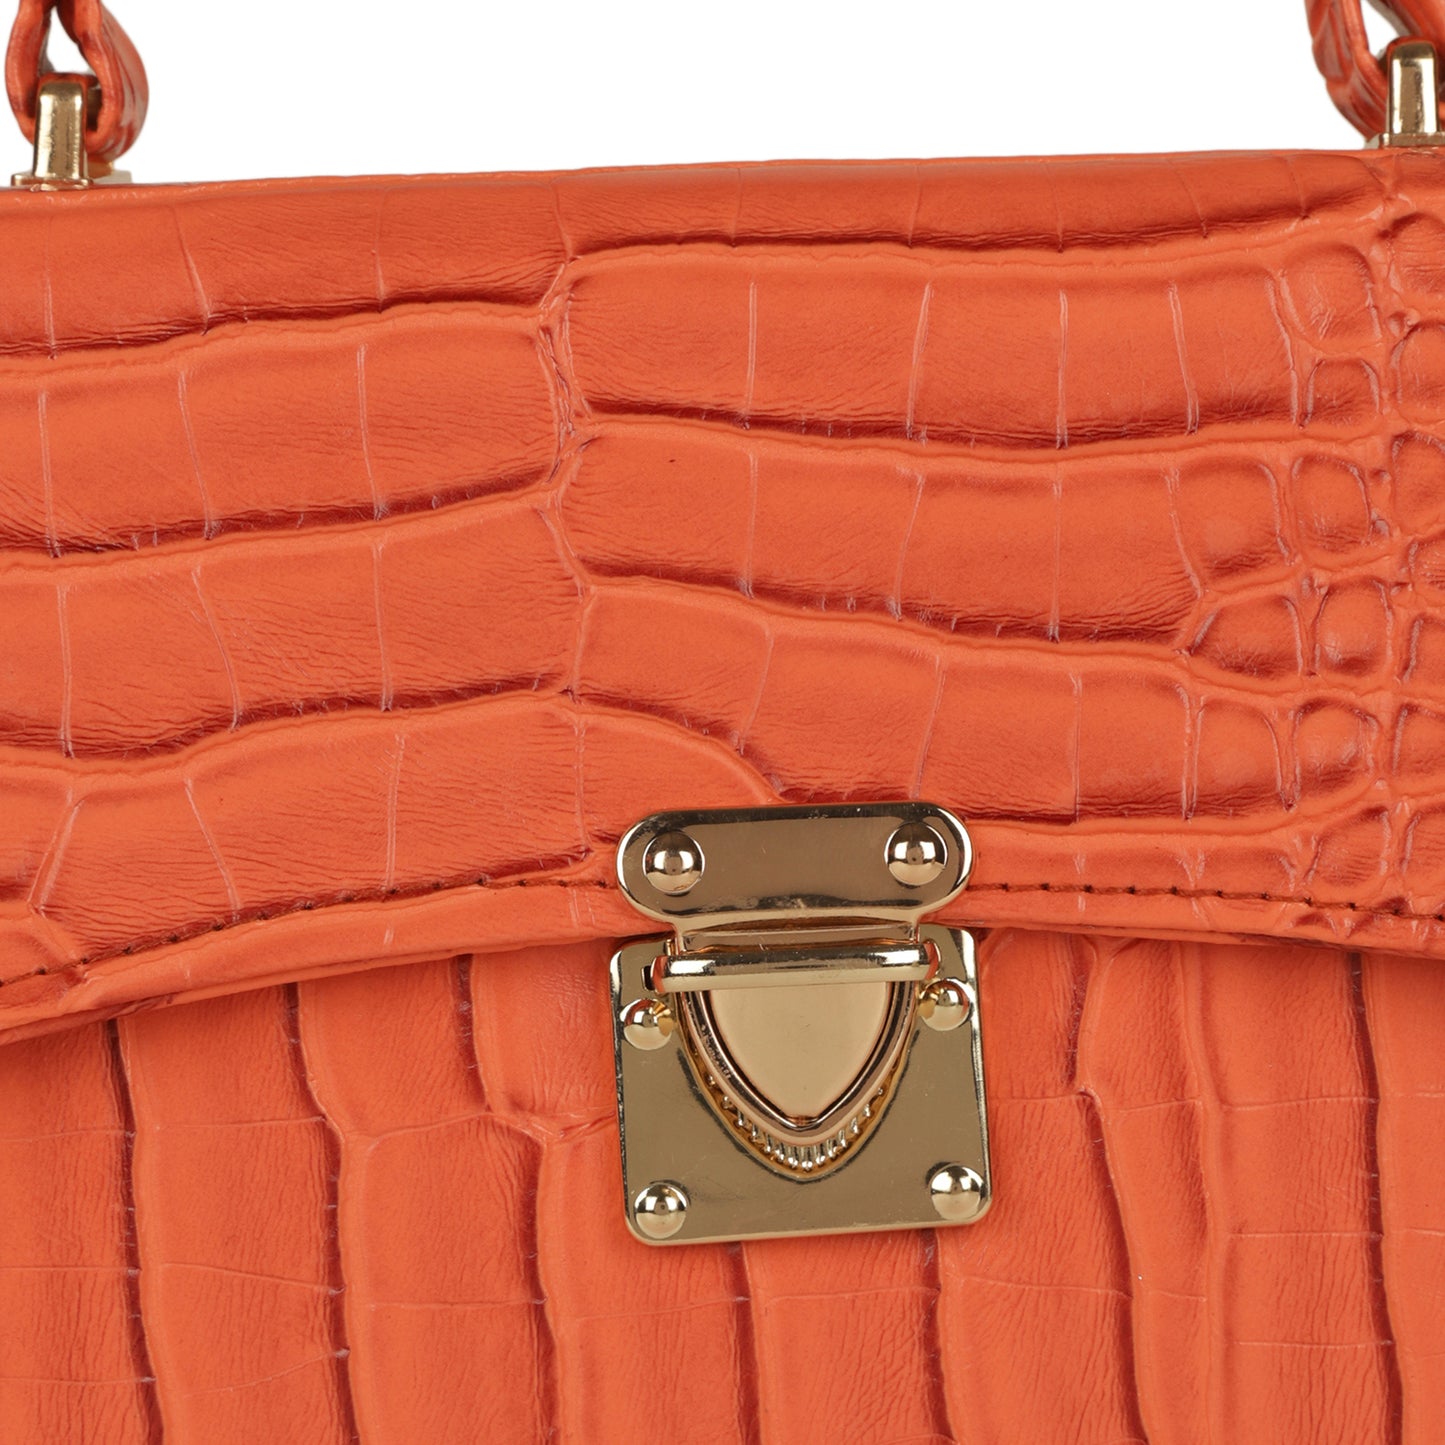 MINI WESST Women's Orange Handbags(MWHB089OR)